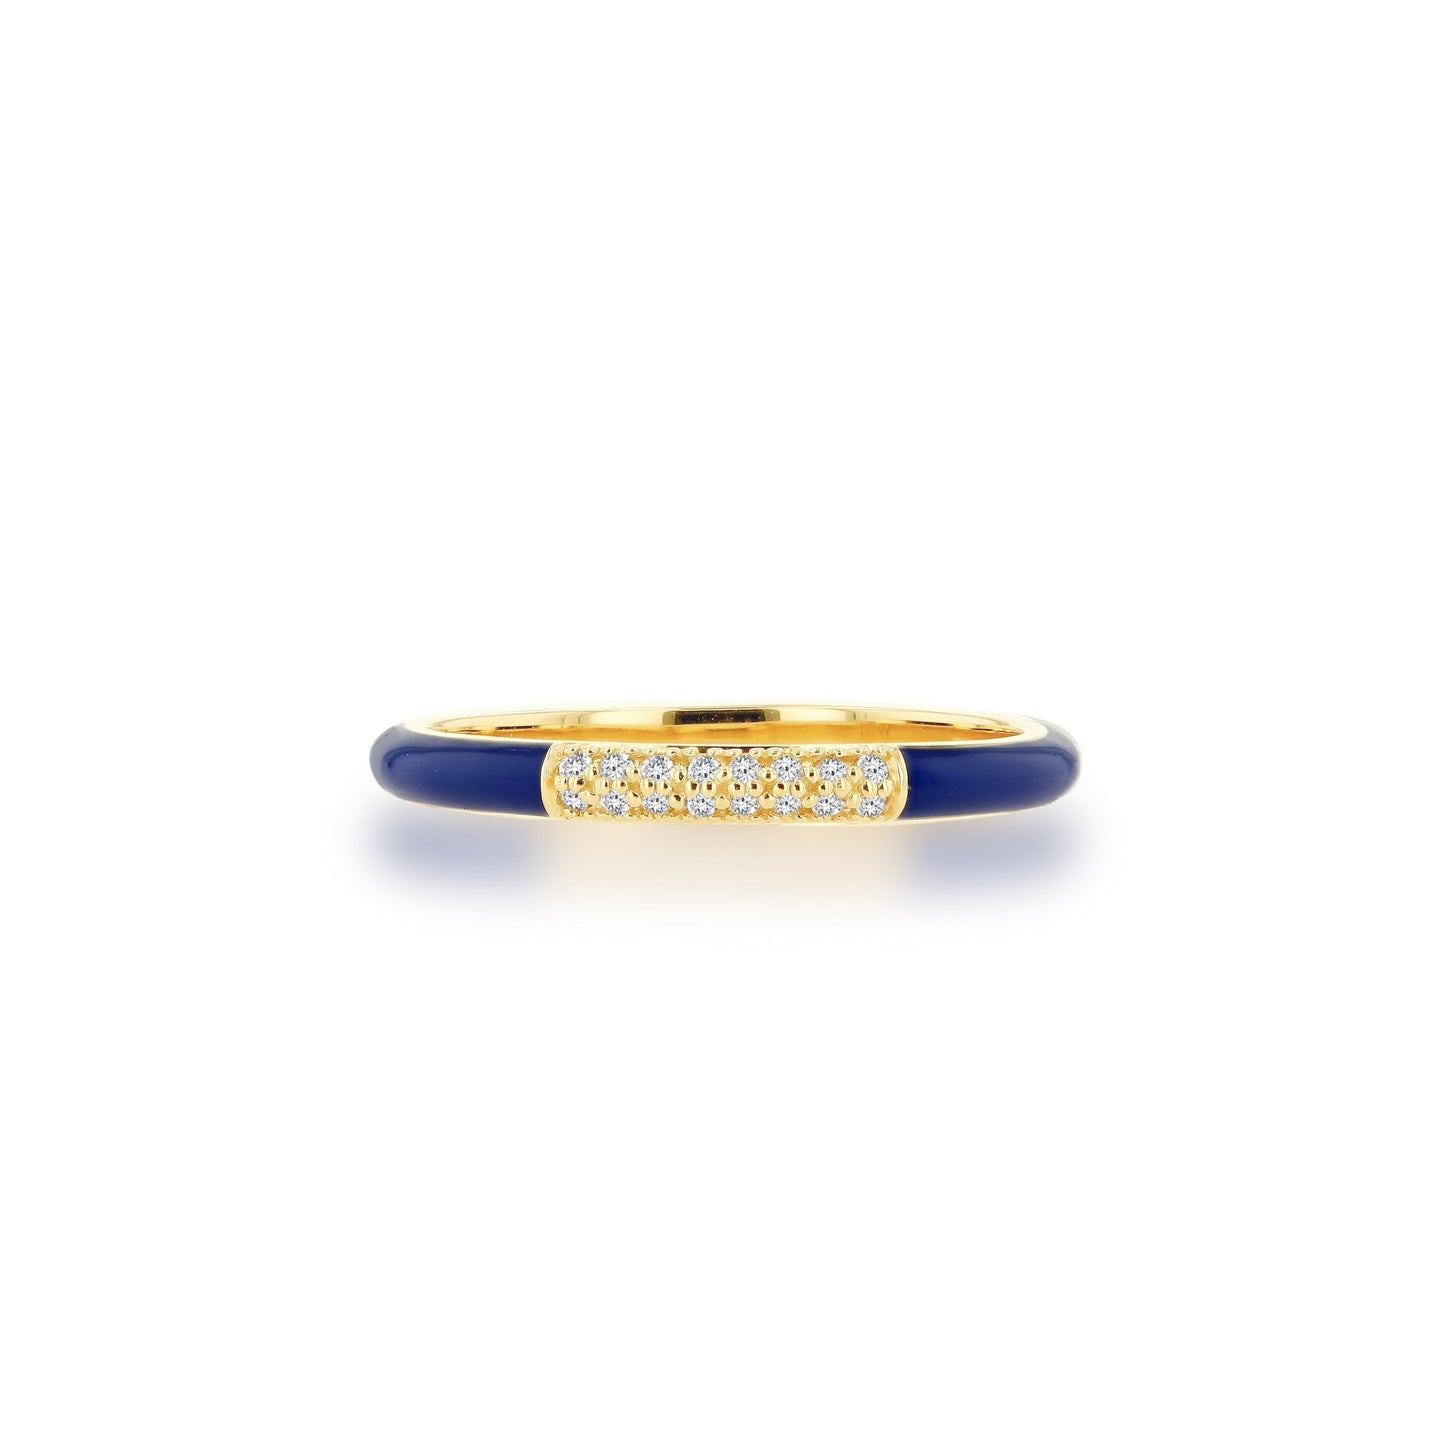 Navy Enamel and Pave Diamond Ring by Rachel Reid